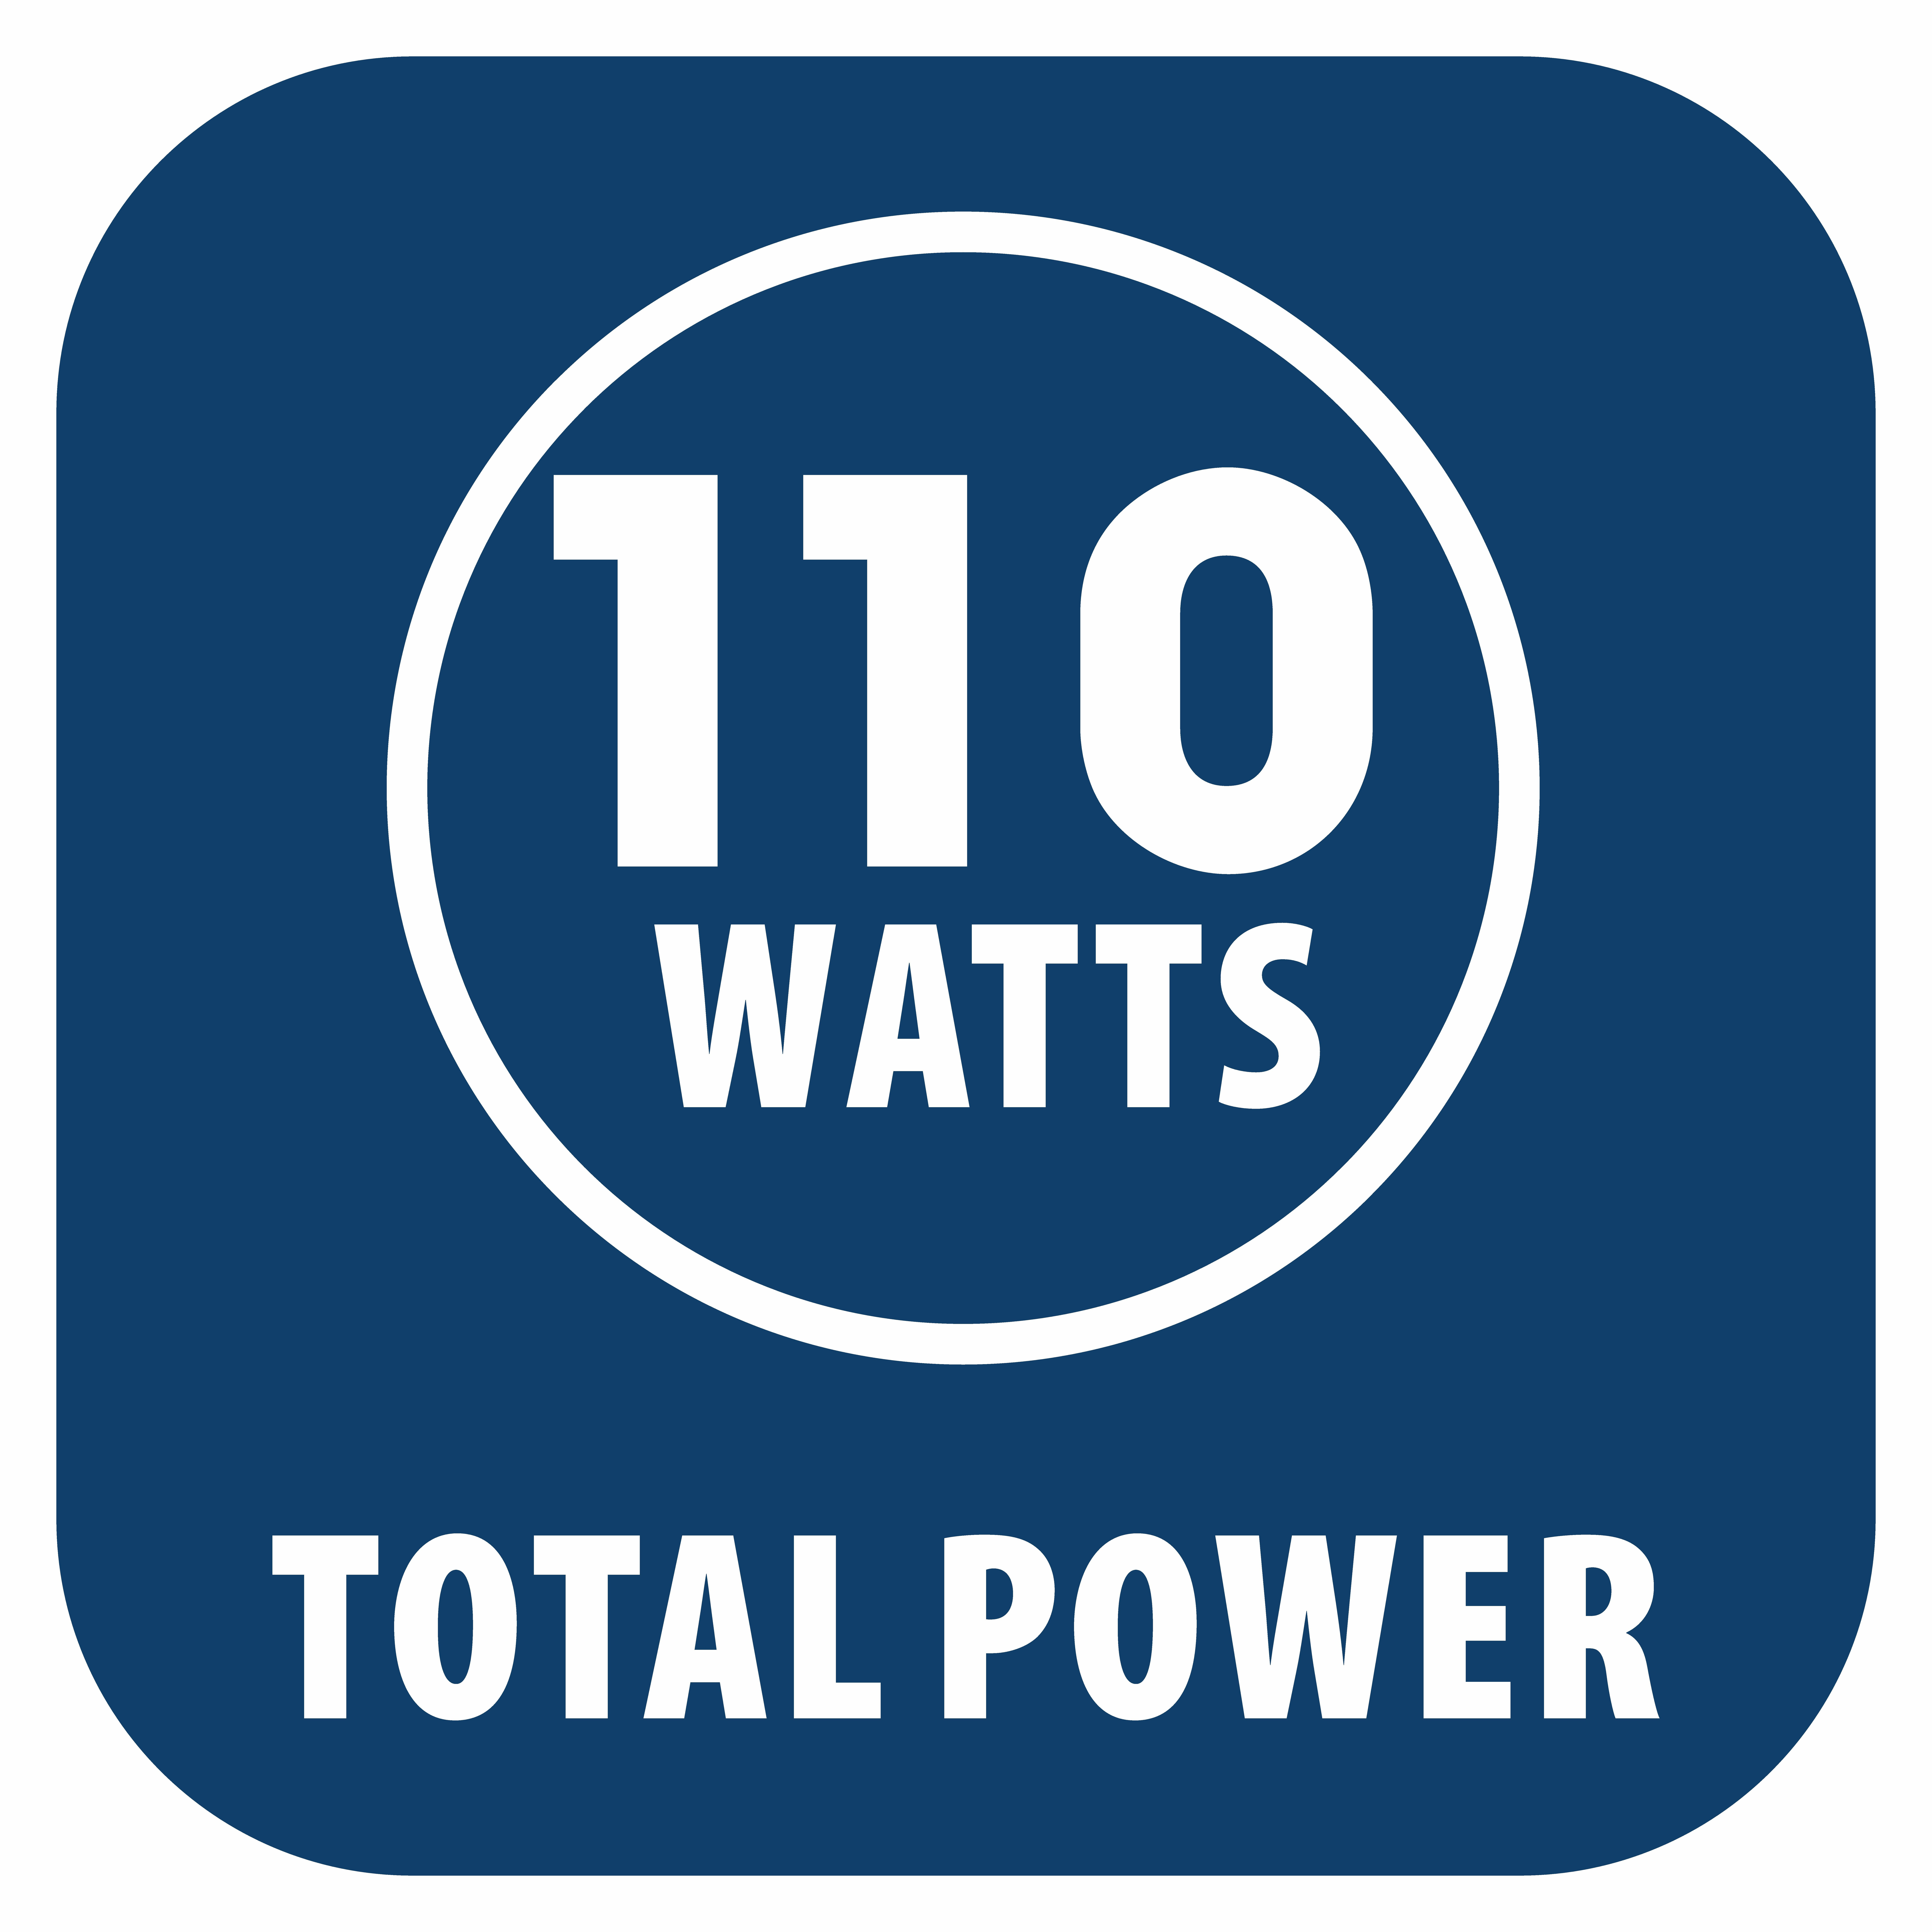 100 Watts Total Power